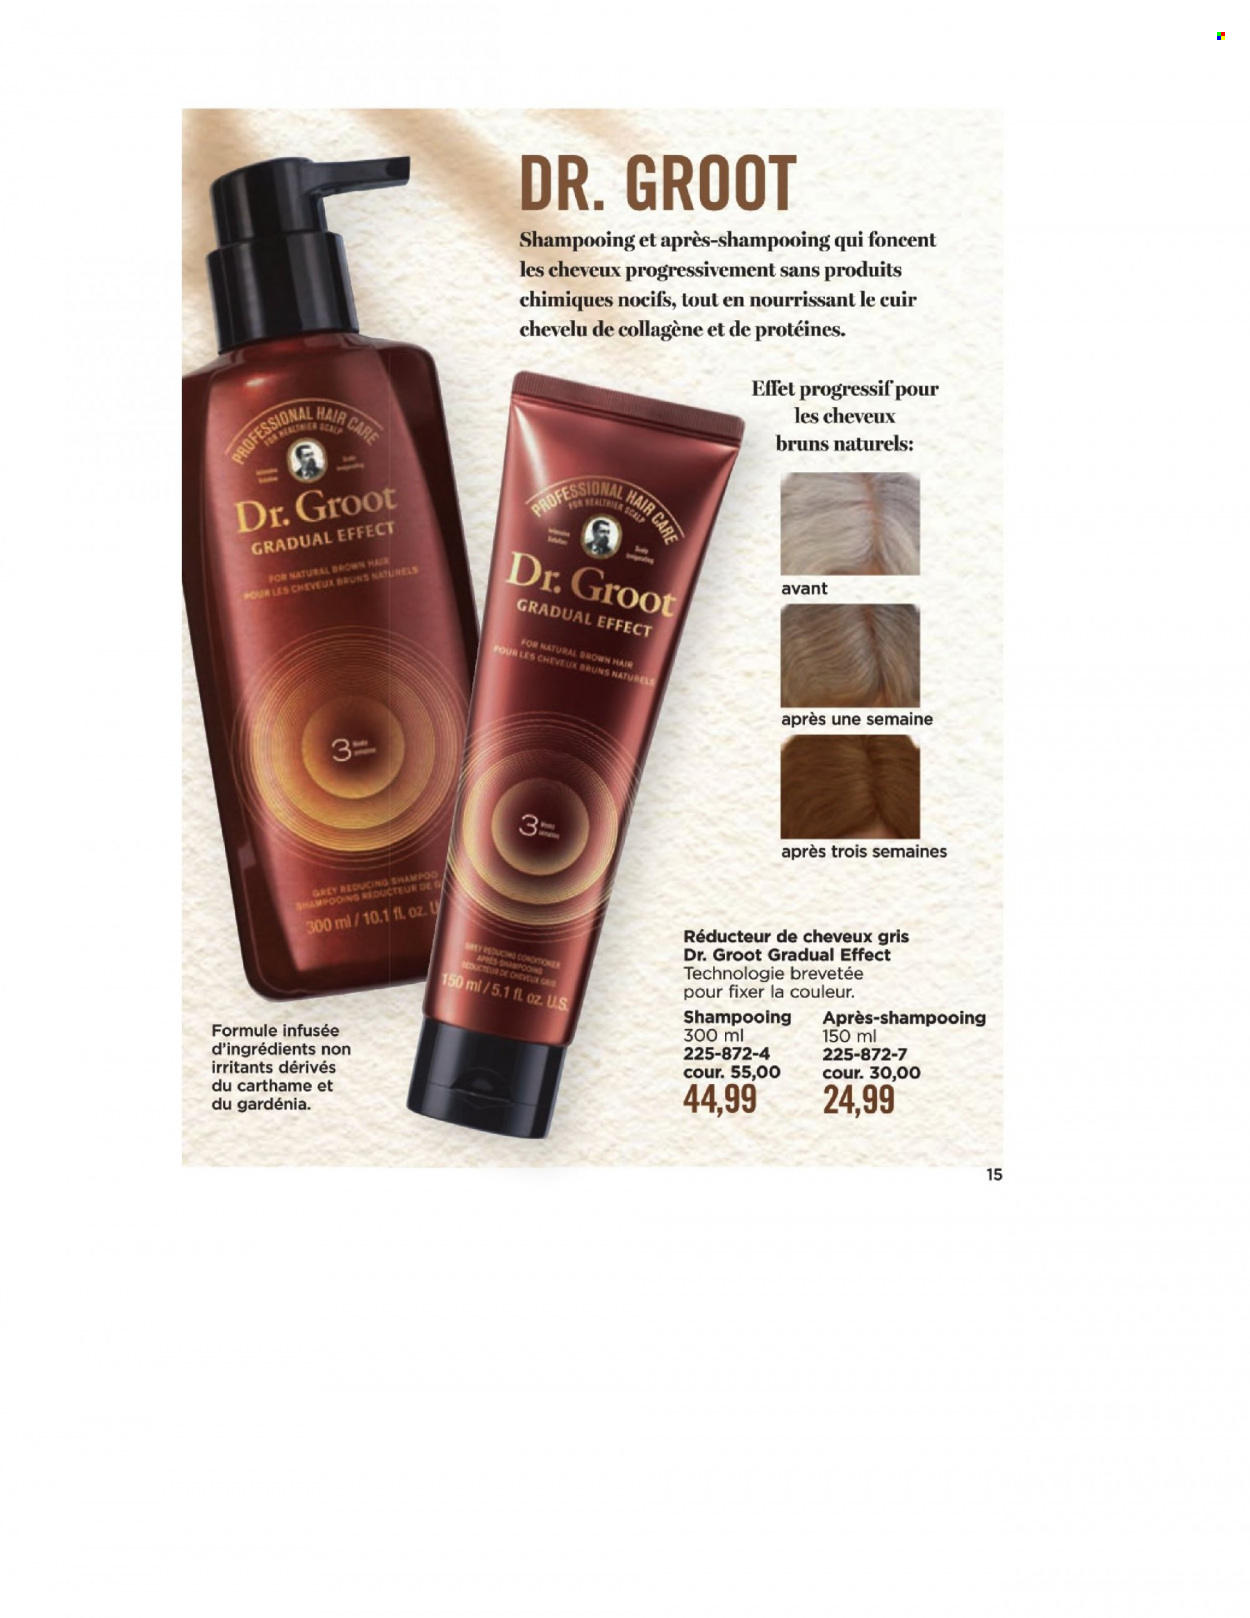 Circulaire Avon - Produits soldés - shampooing. Page 15.